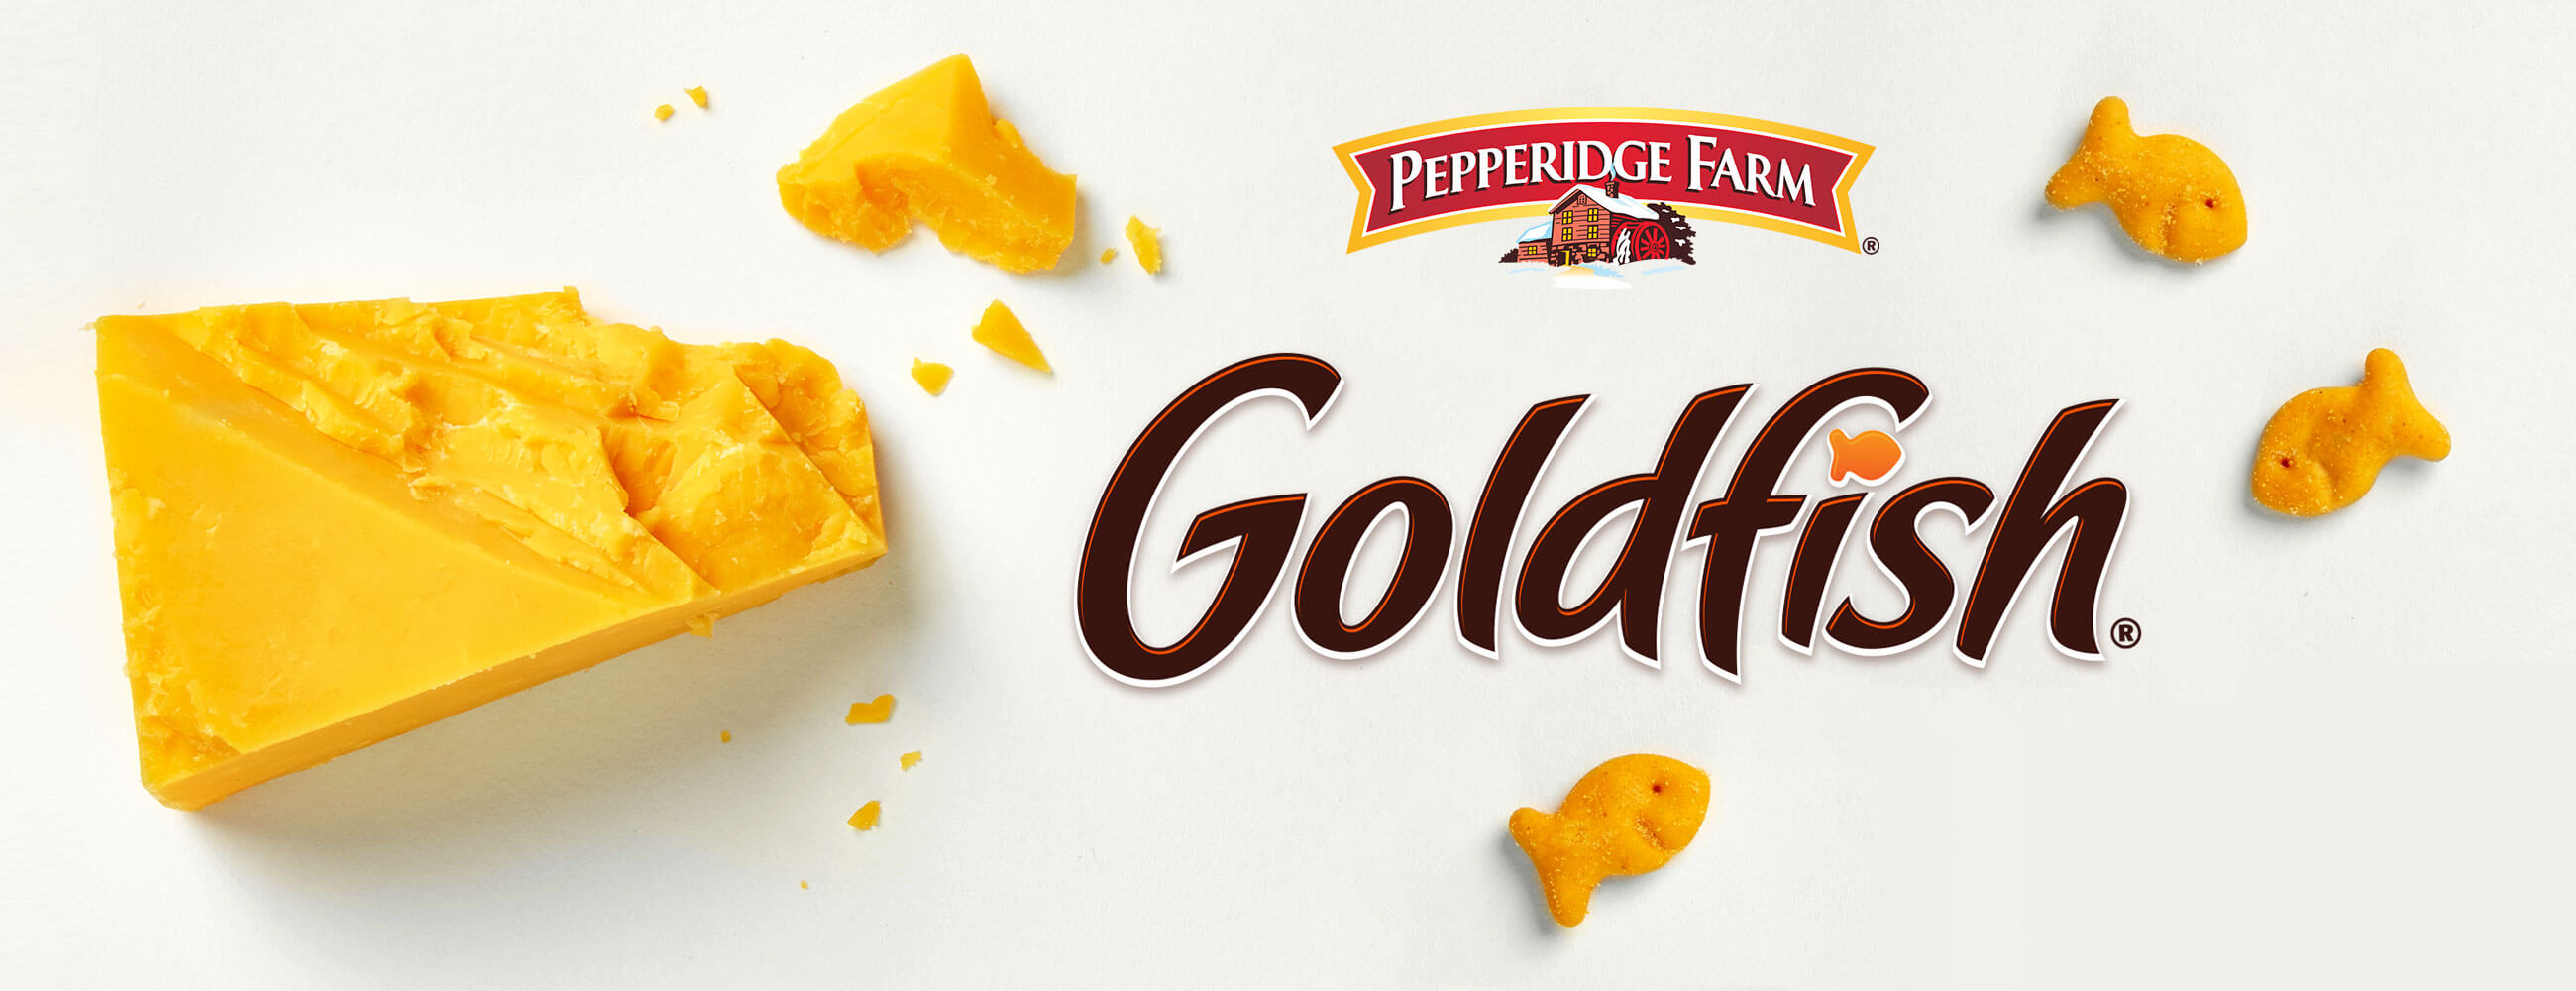 Pepperidge Farm Goldfish® logo with cheddar cheese block and Goldfish® crackers